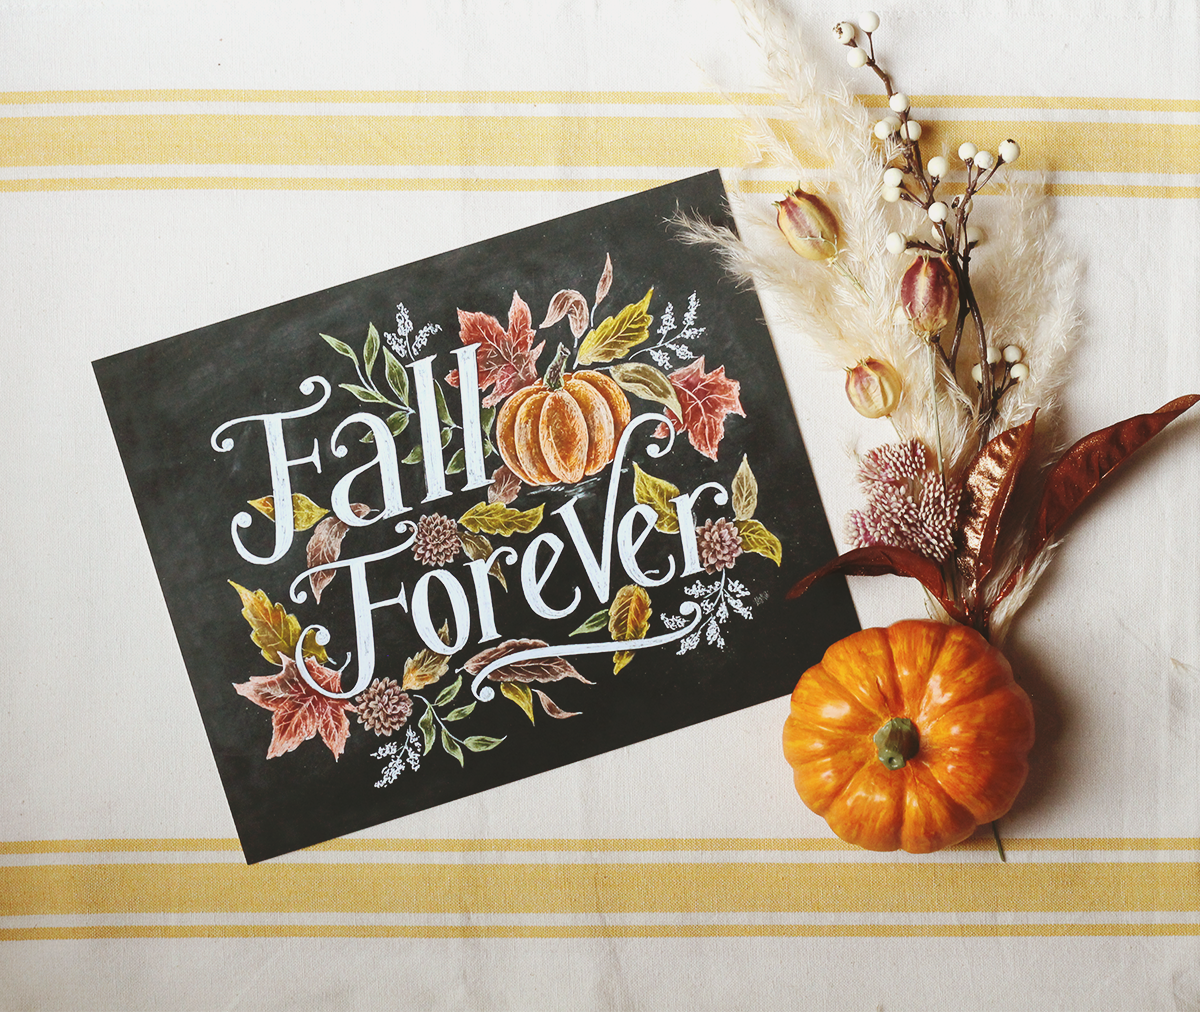 Fall Forever Chalk Art Print - Fall Decorating